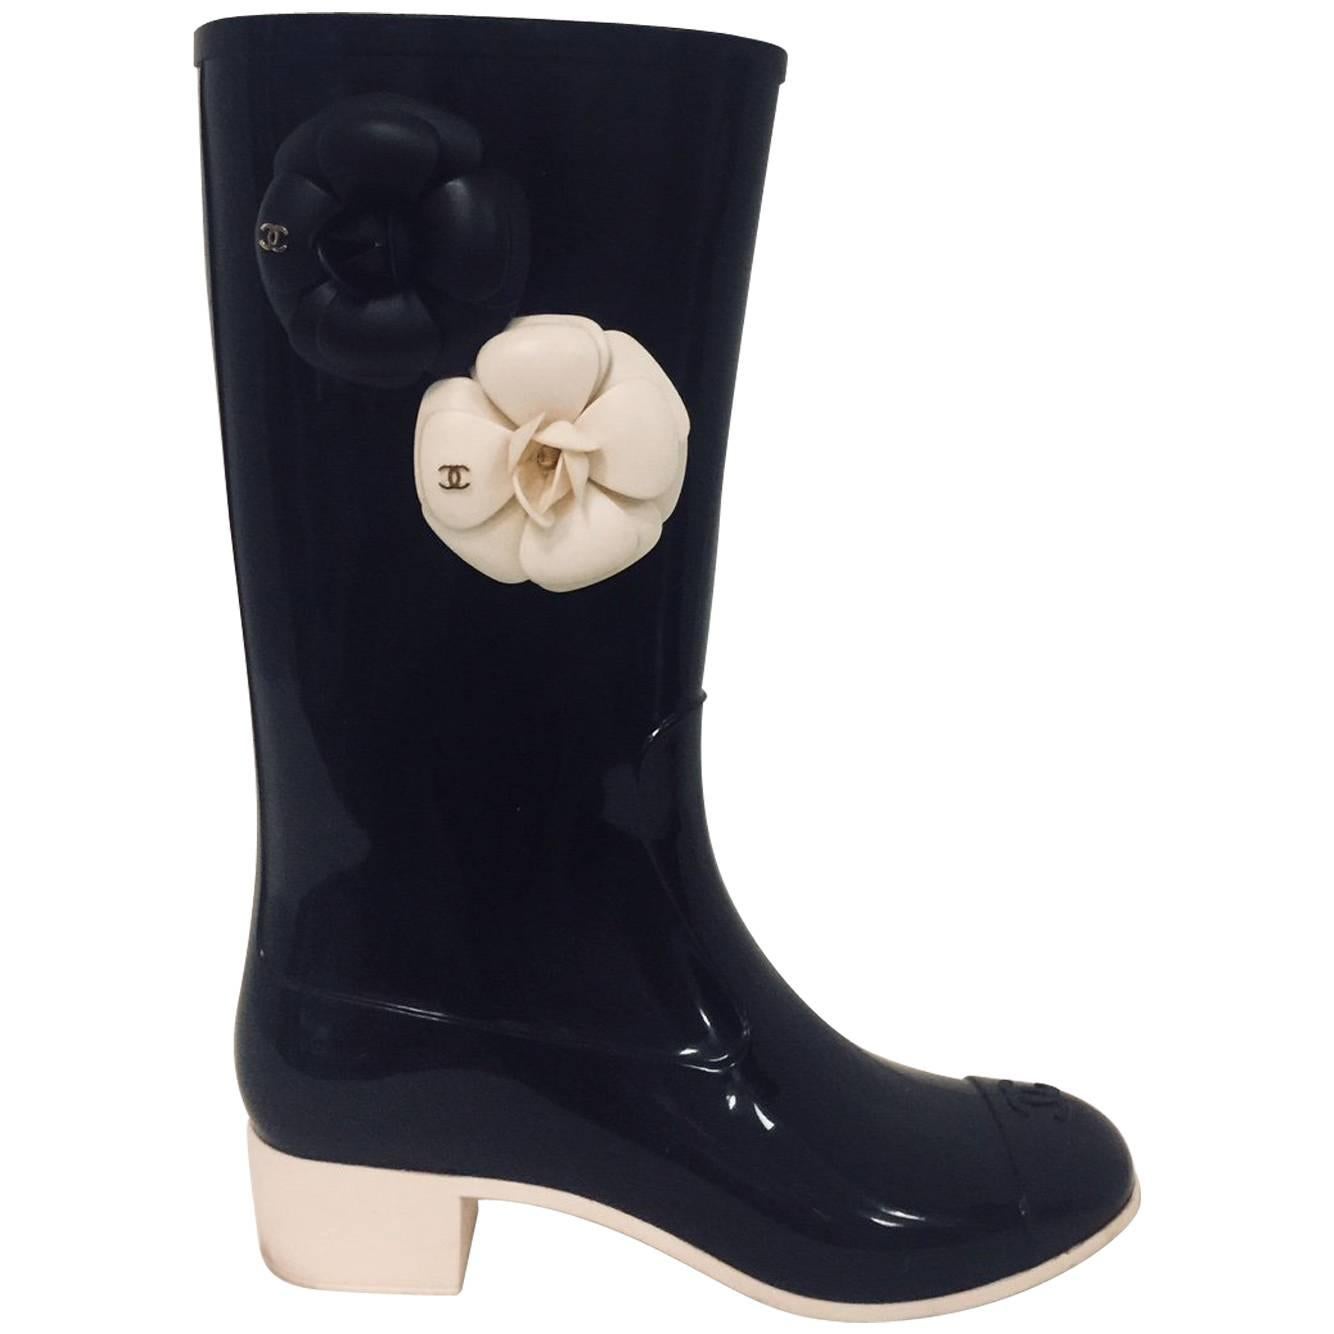 CHANEL Camellia Rain Boots Boots Women's Rubber Moss Green EU36 US6 UK4.5